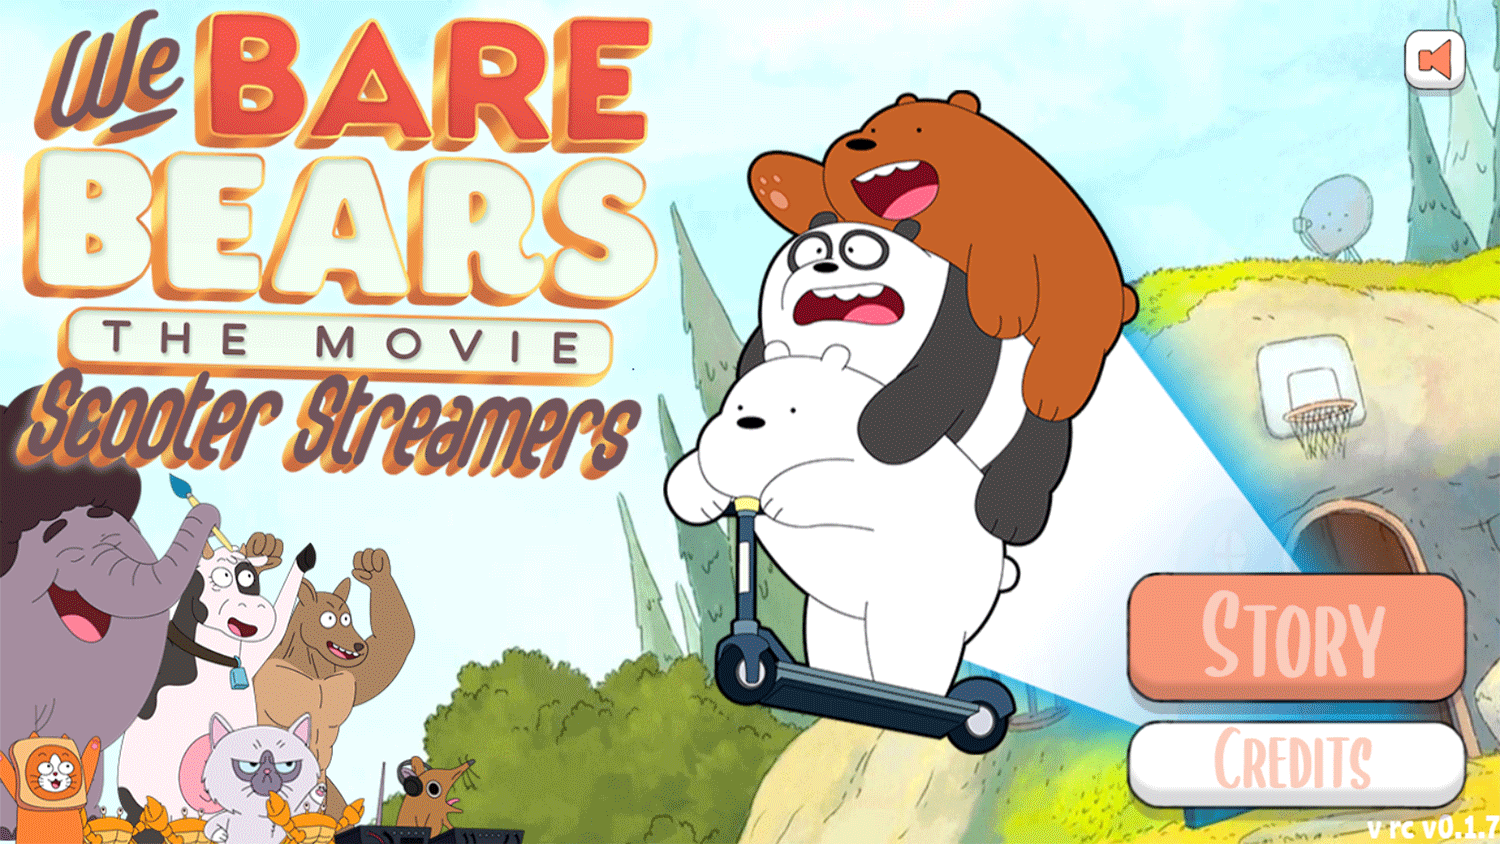 We Bare Bears Scooter Streamers Welcome Screen Screenshot.